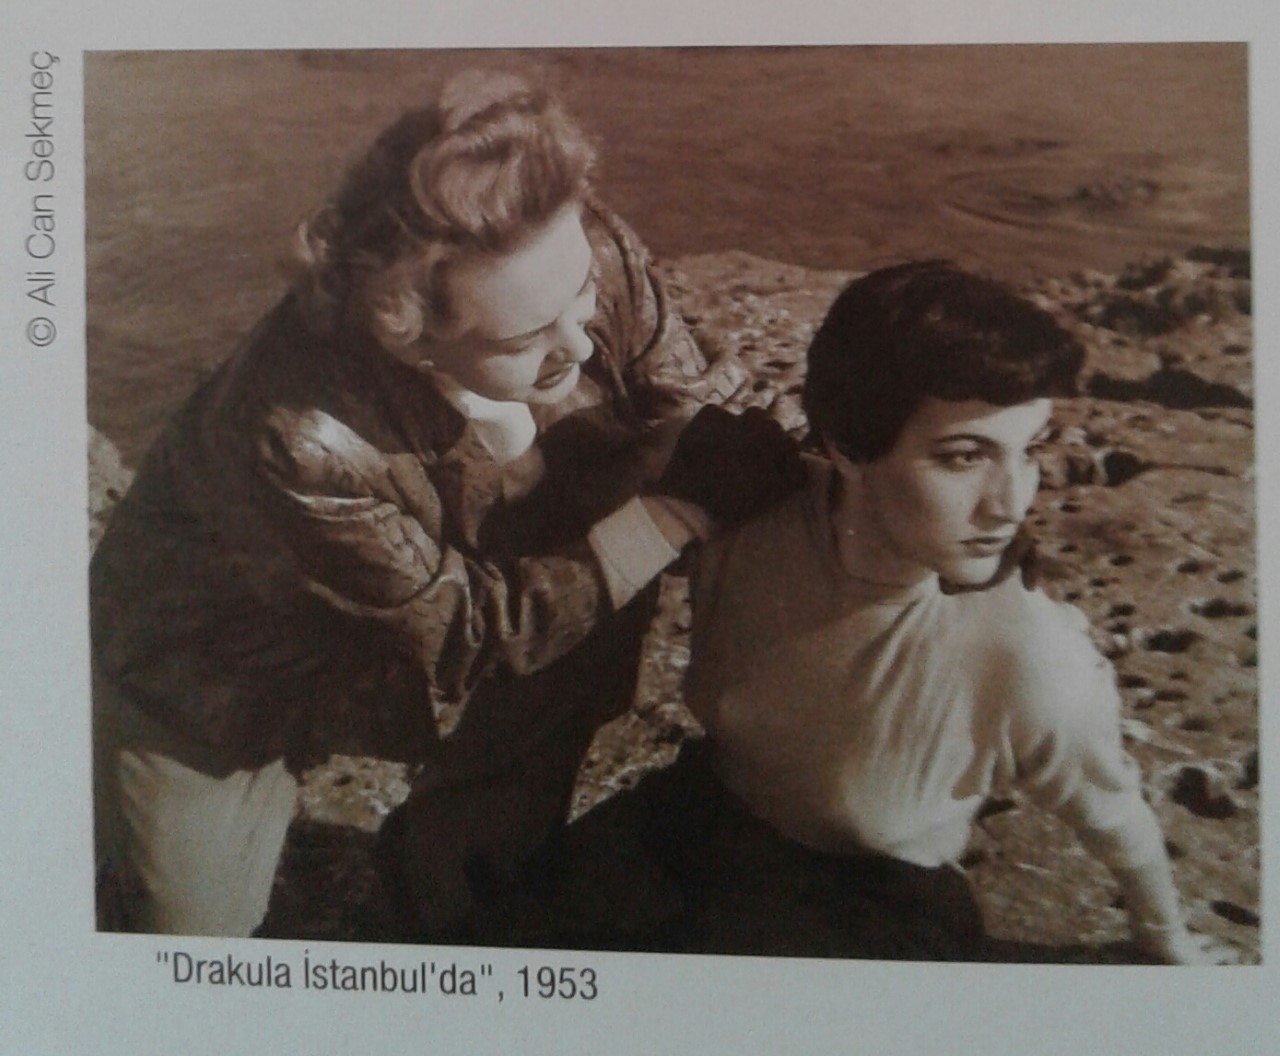 Drakula Istanbul'da (1953) Screenshot 1 